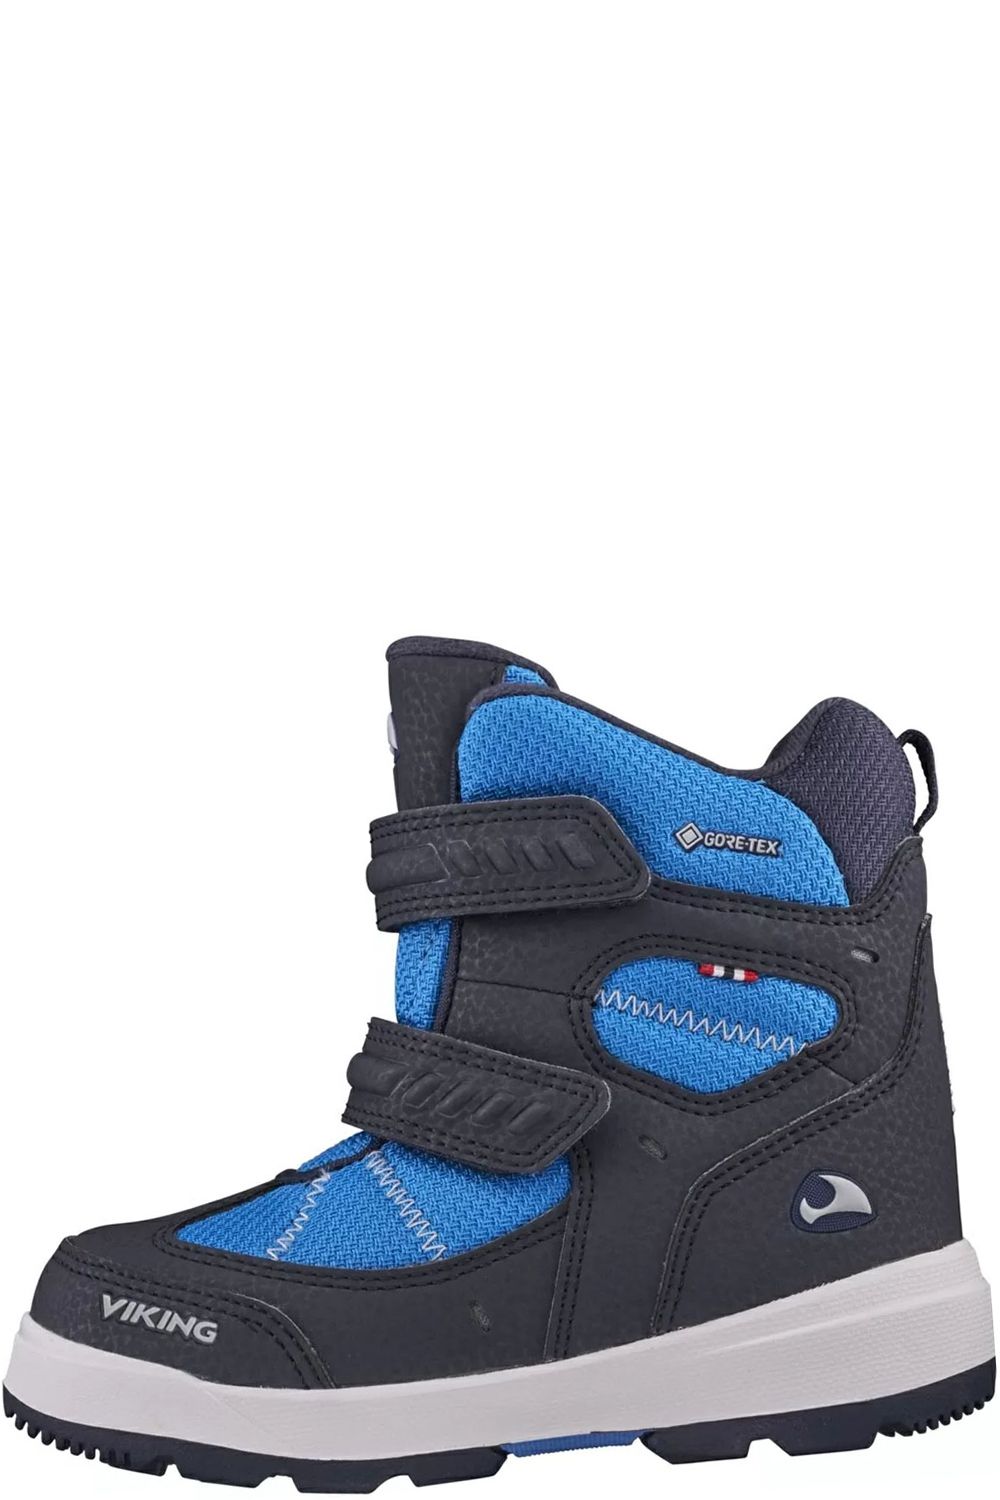 Ботинки Viking, размер 24, цвет синий - фото 1